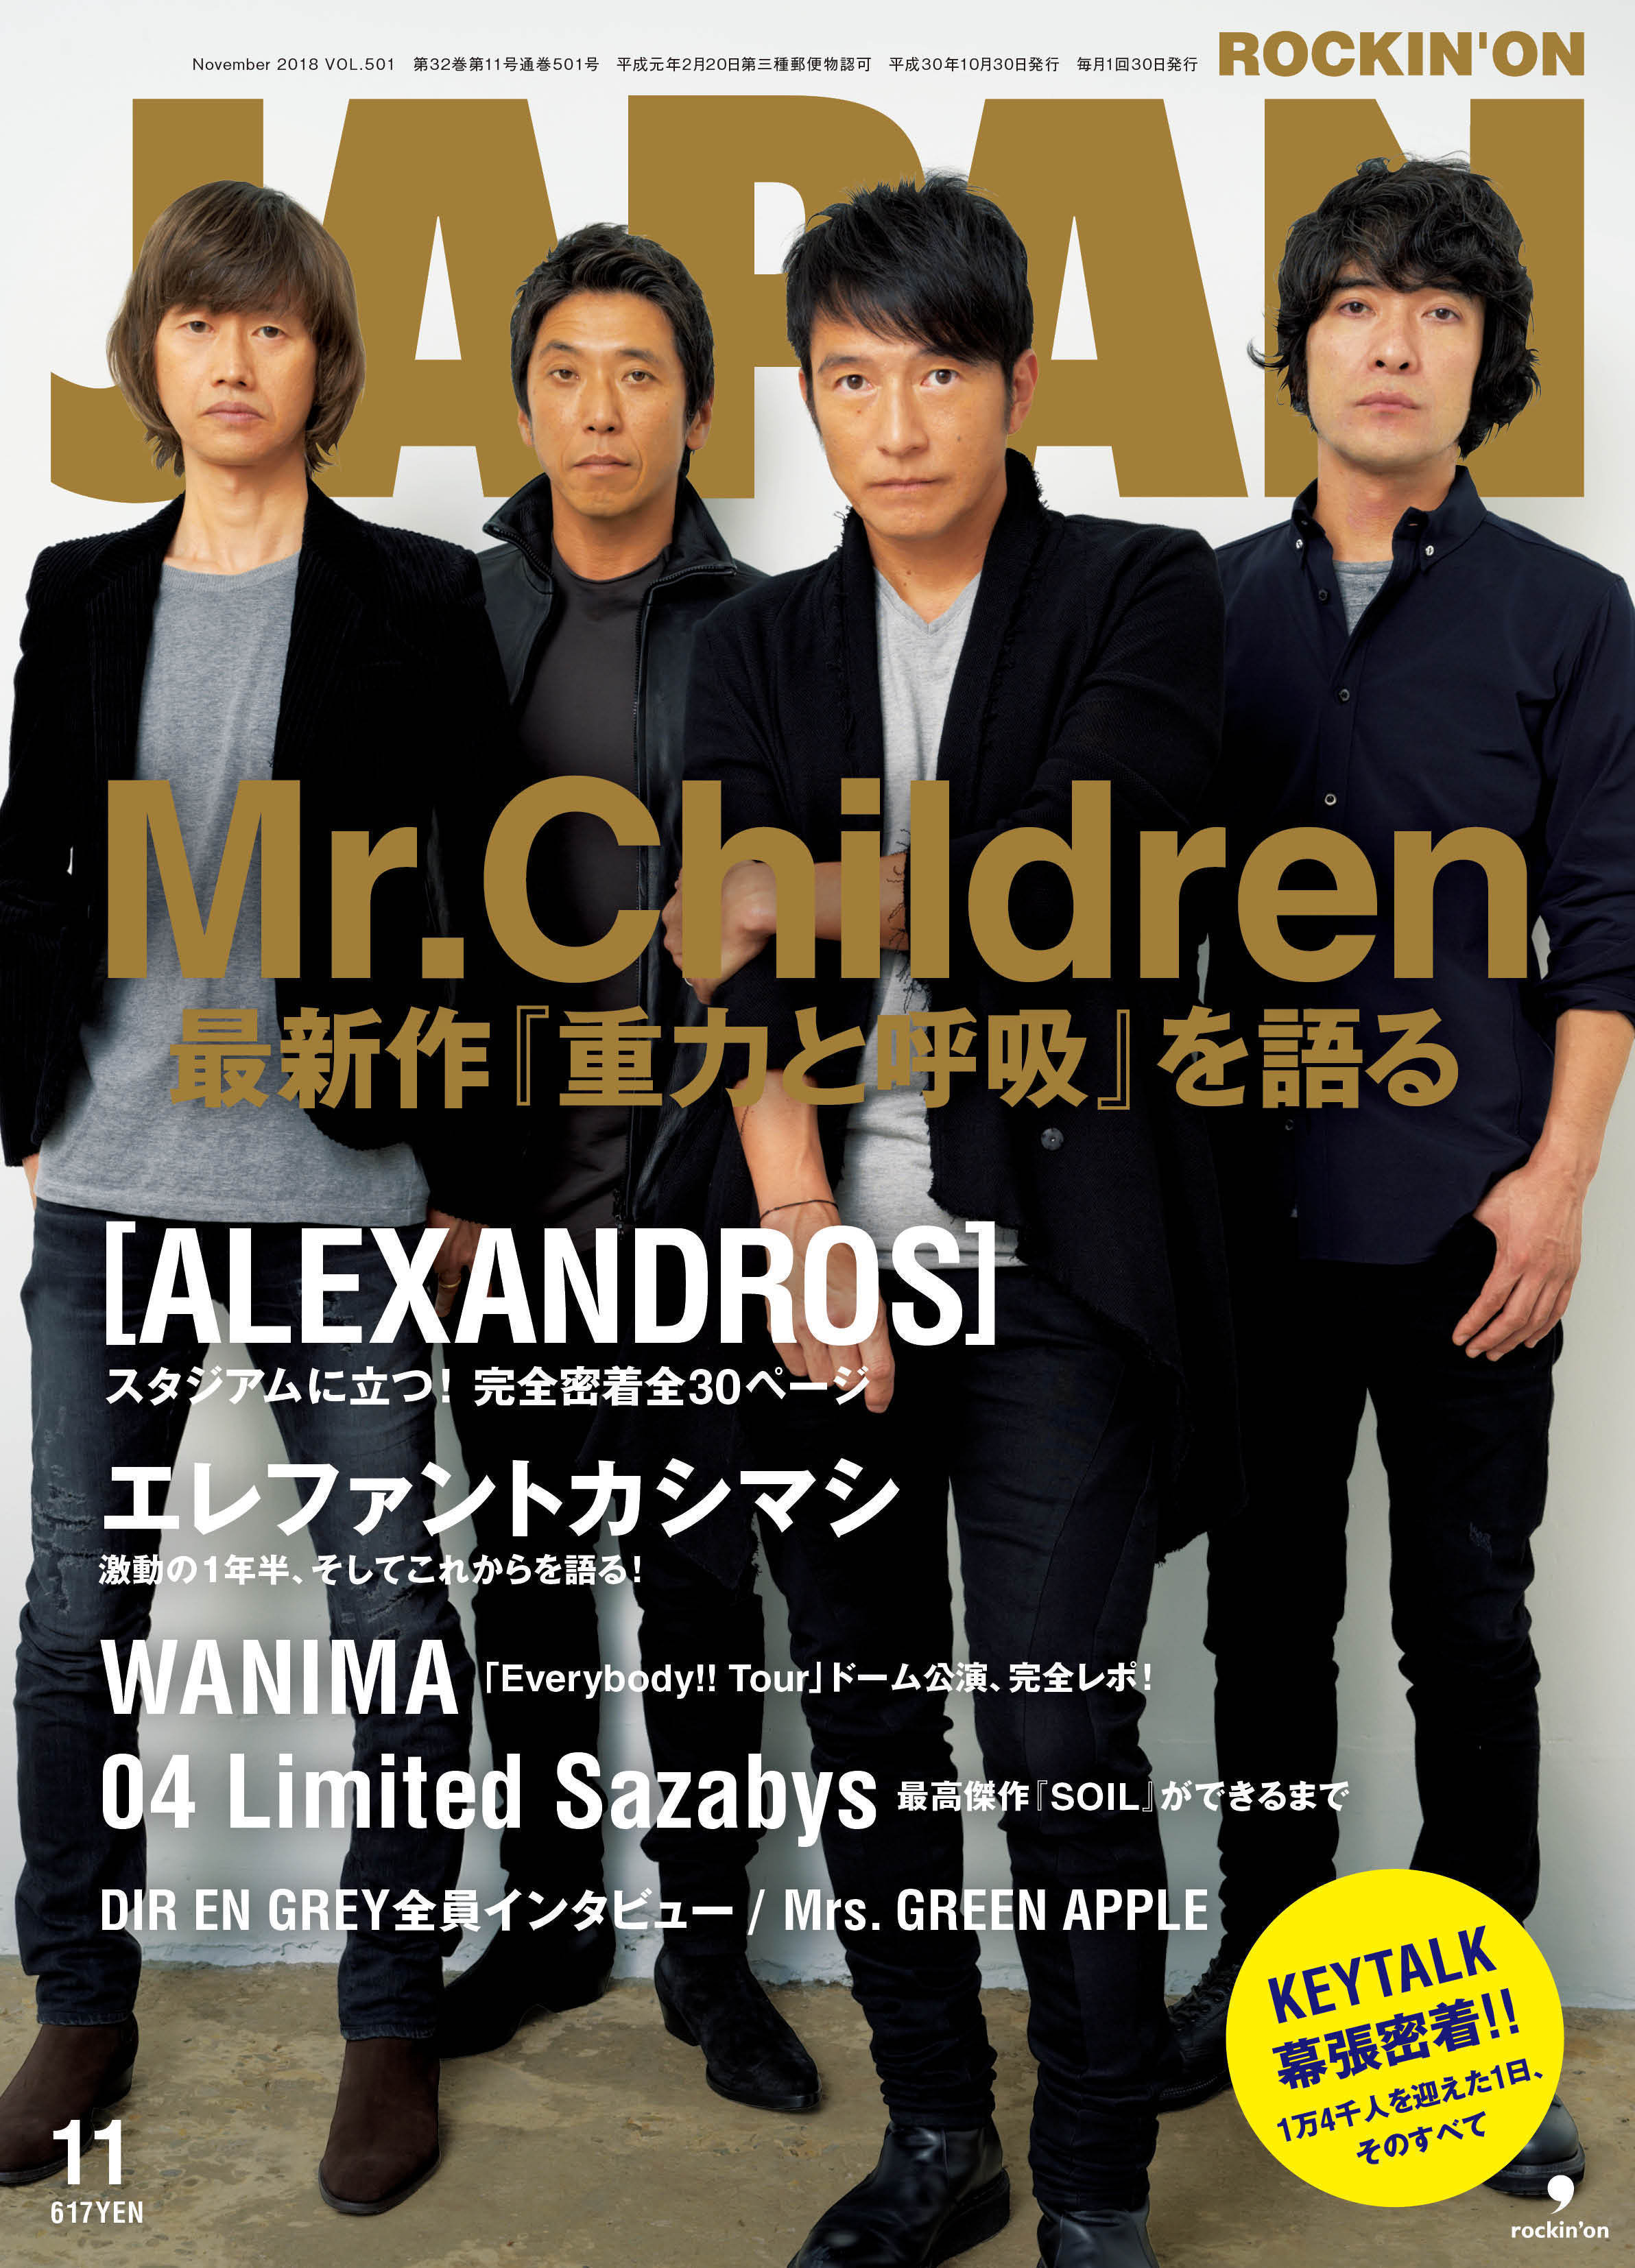 JAPAN最新号 表紙はMr.Children！ [ALEXANDROS]ZOZOマリン密着